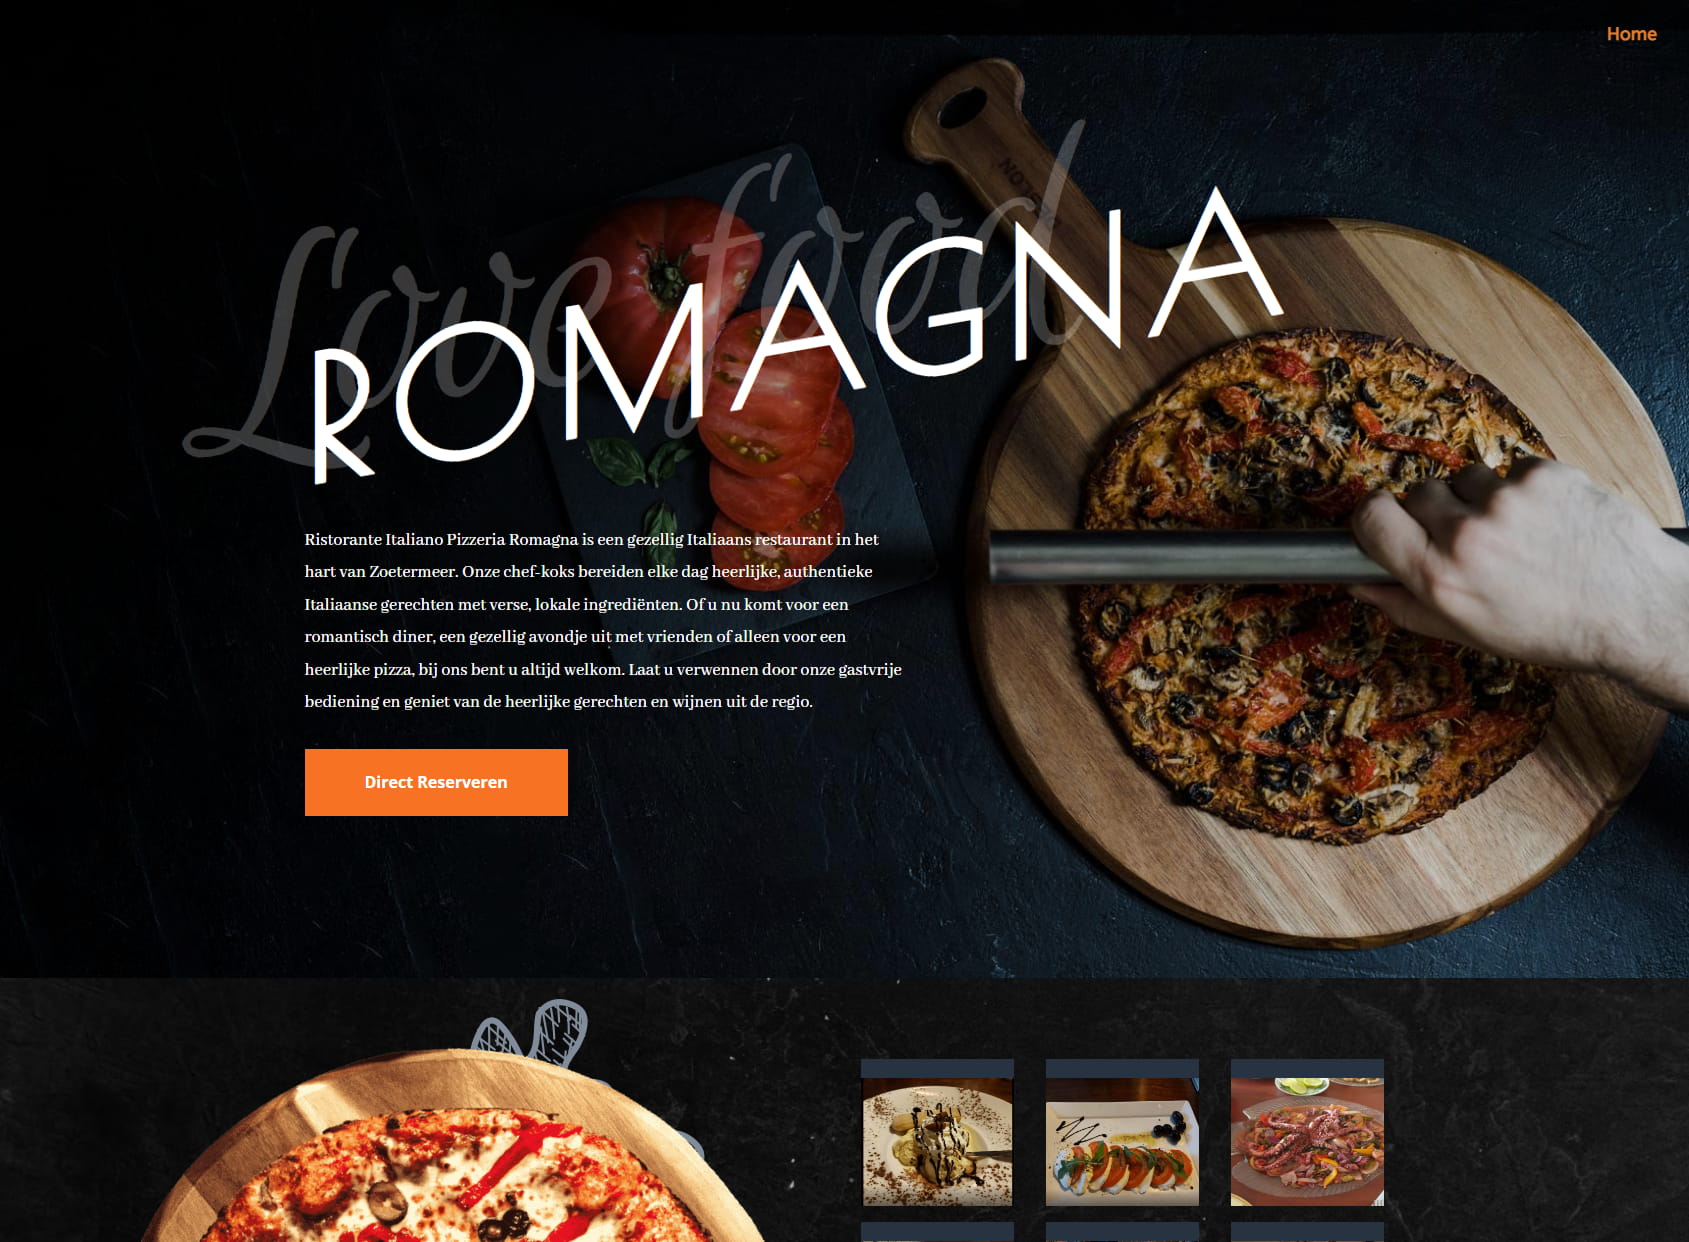 Ristorante Italiano Pizzeria Romagna